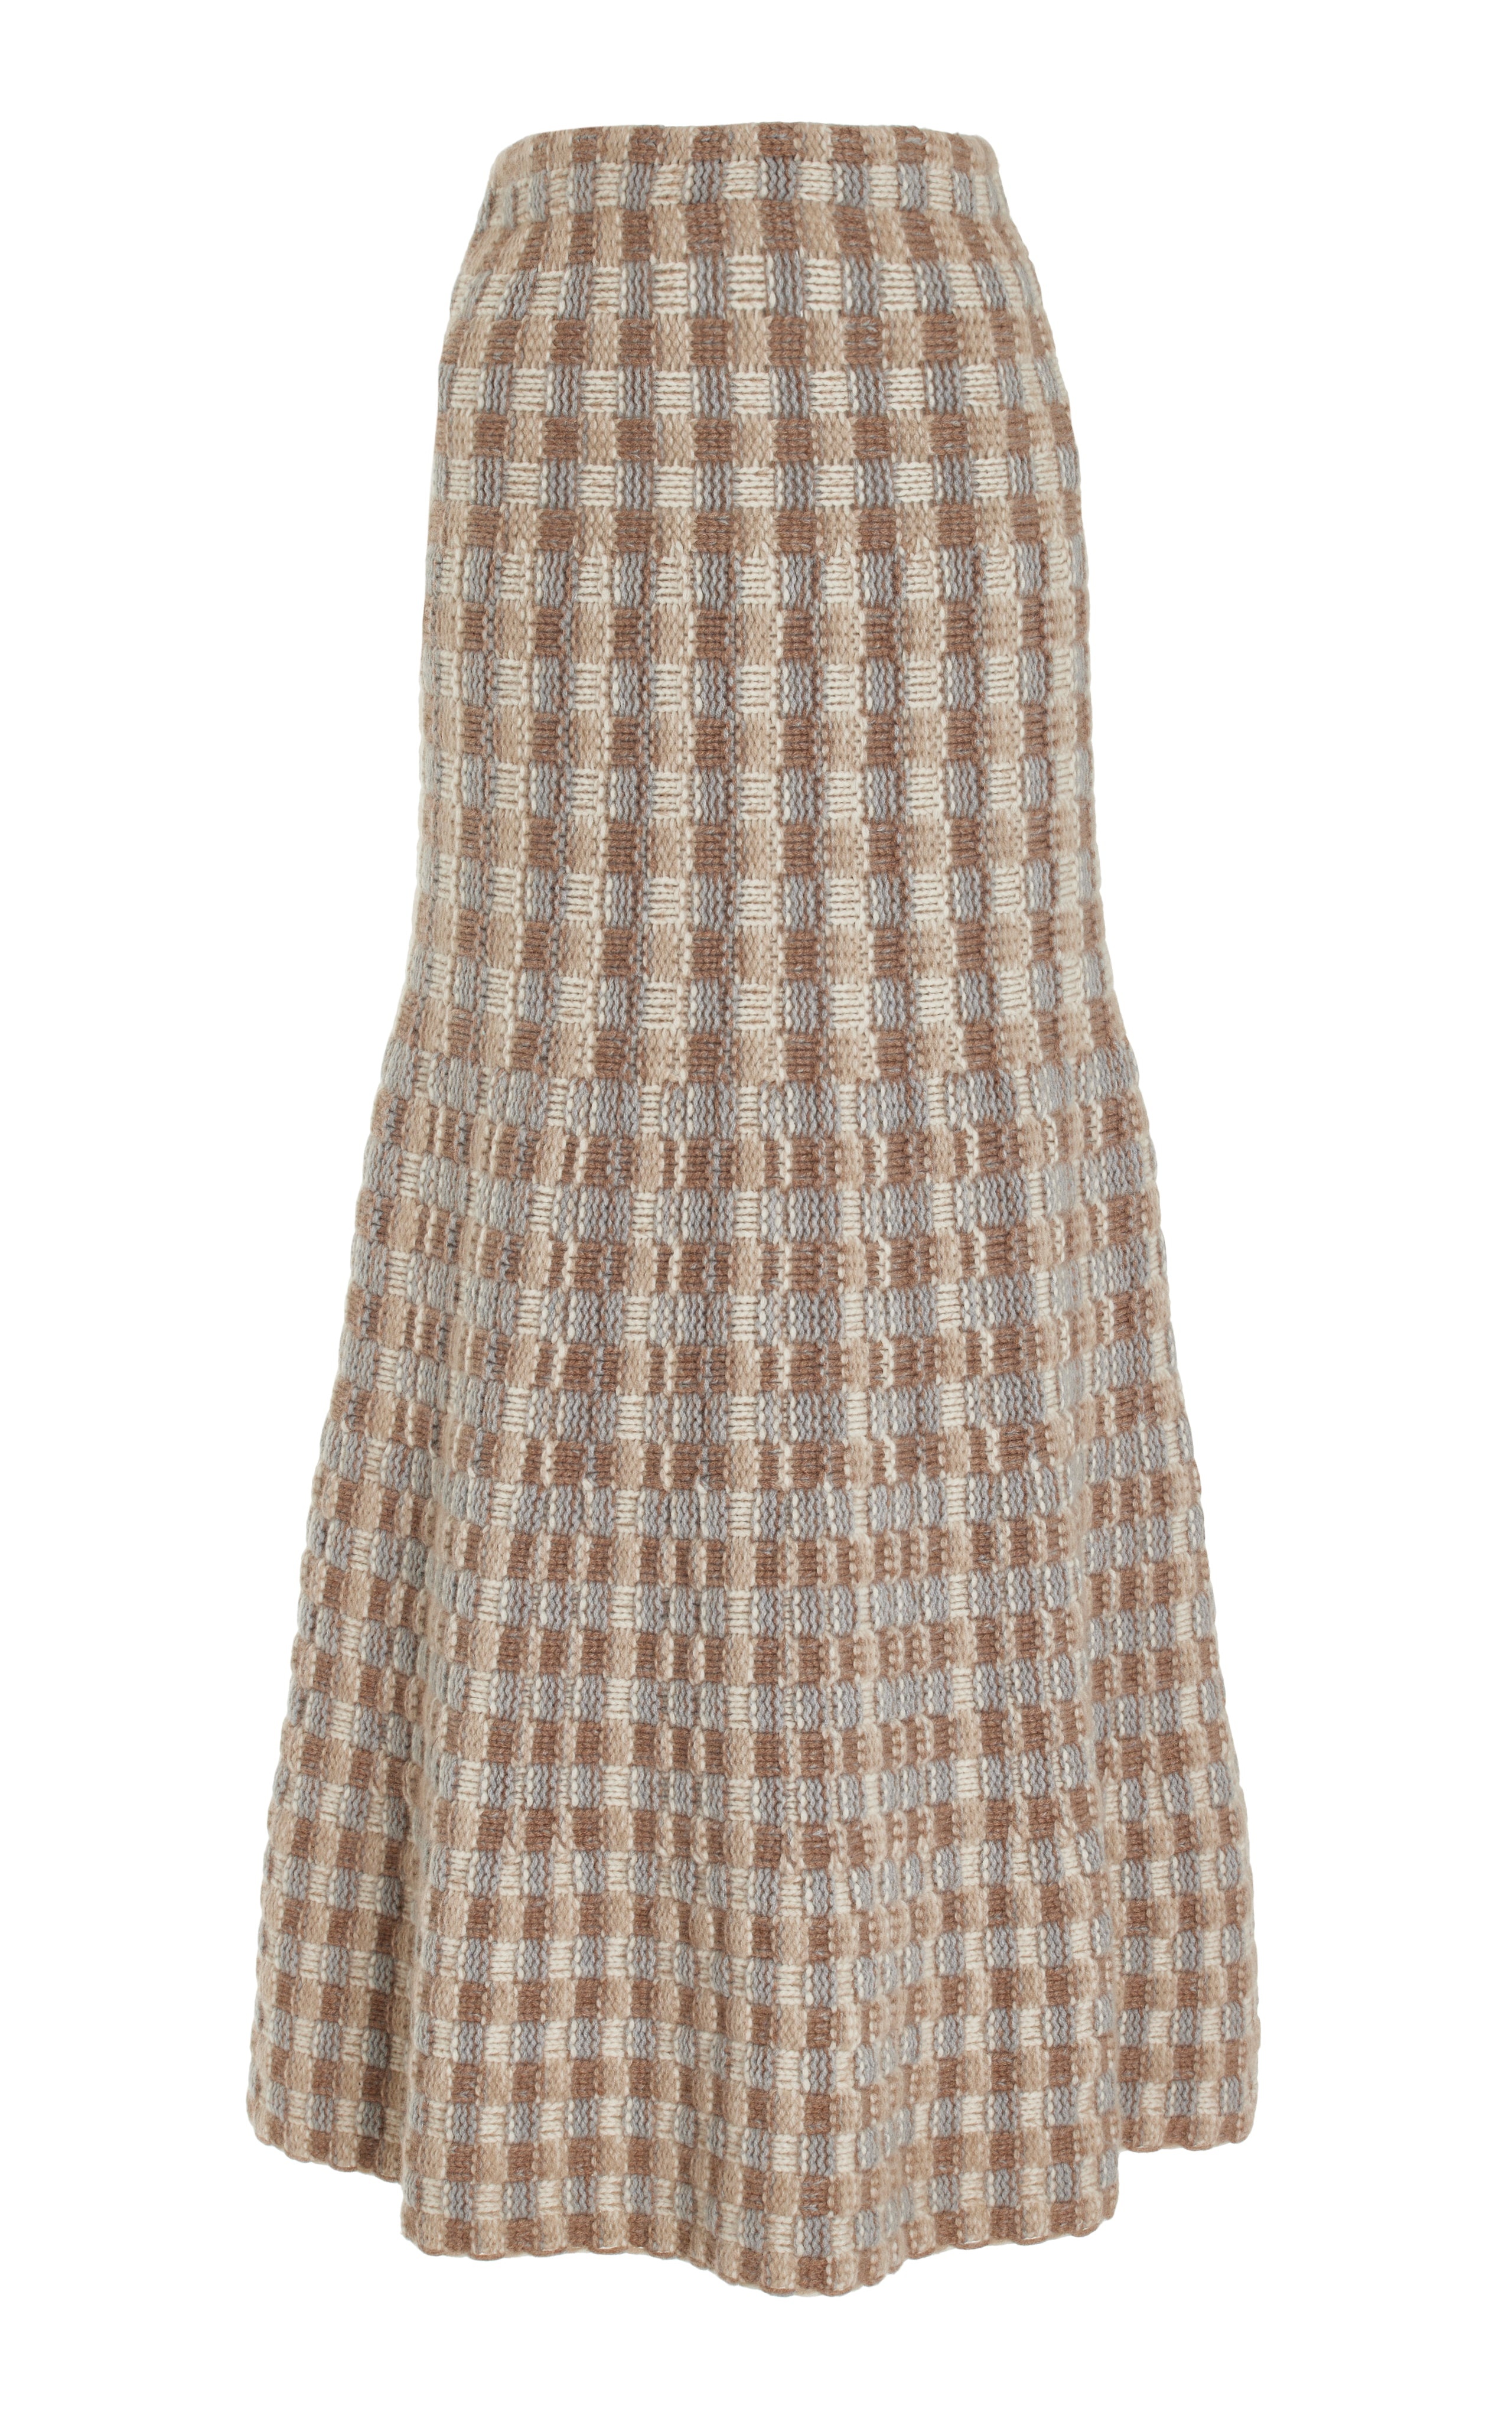 Drew Skirt in Multi Ivory Cashmere - 1